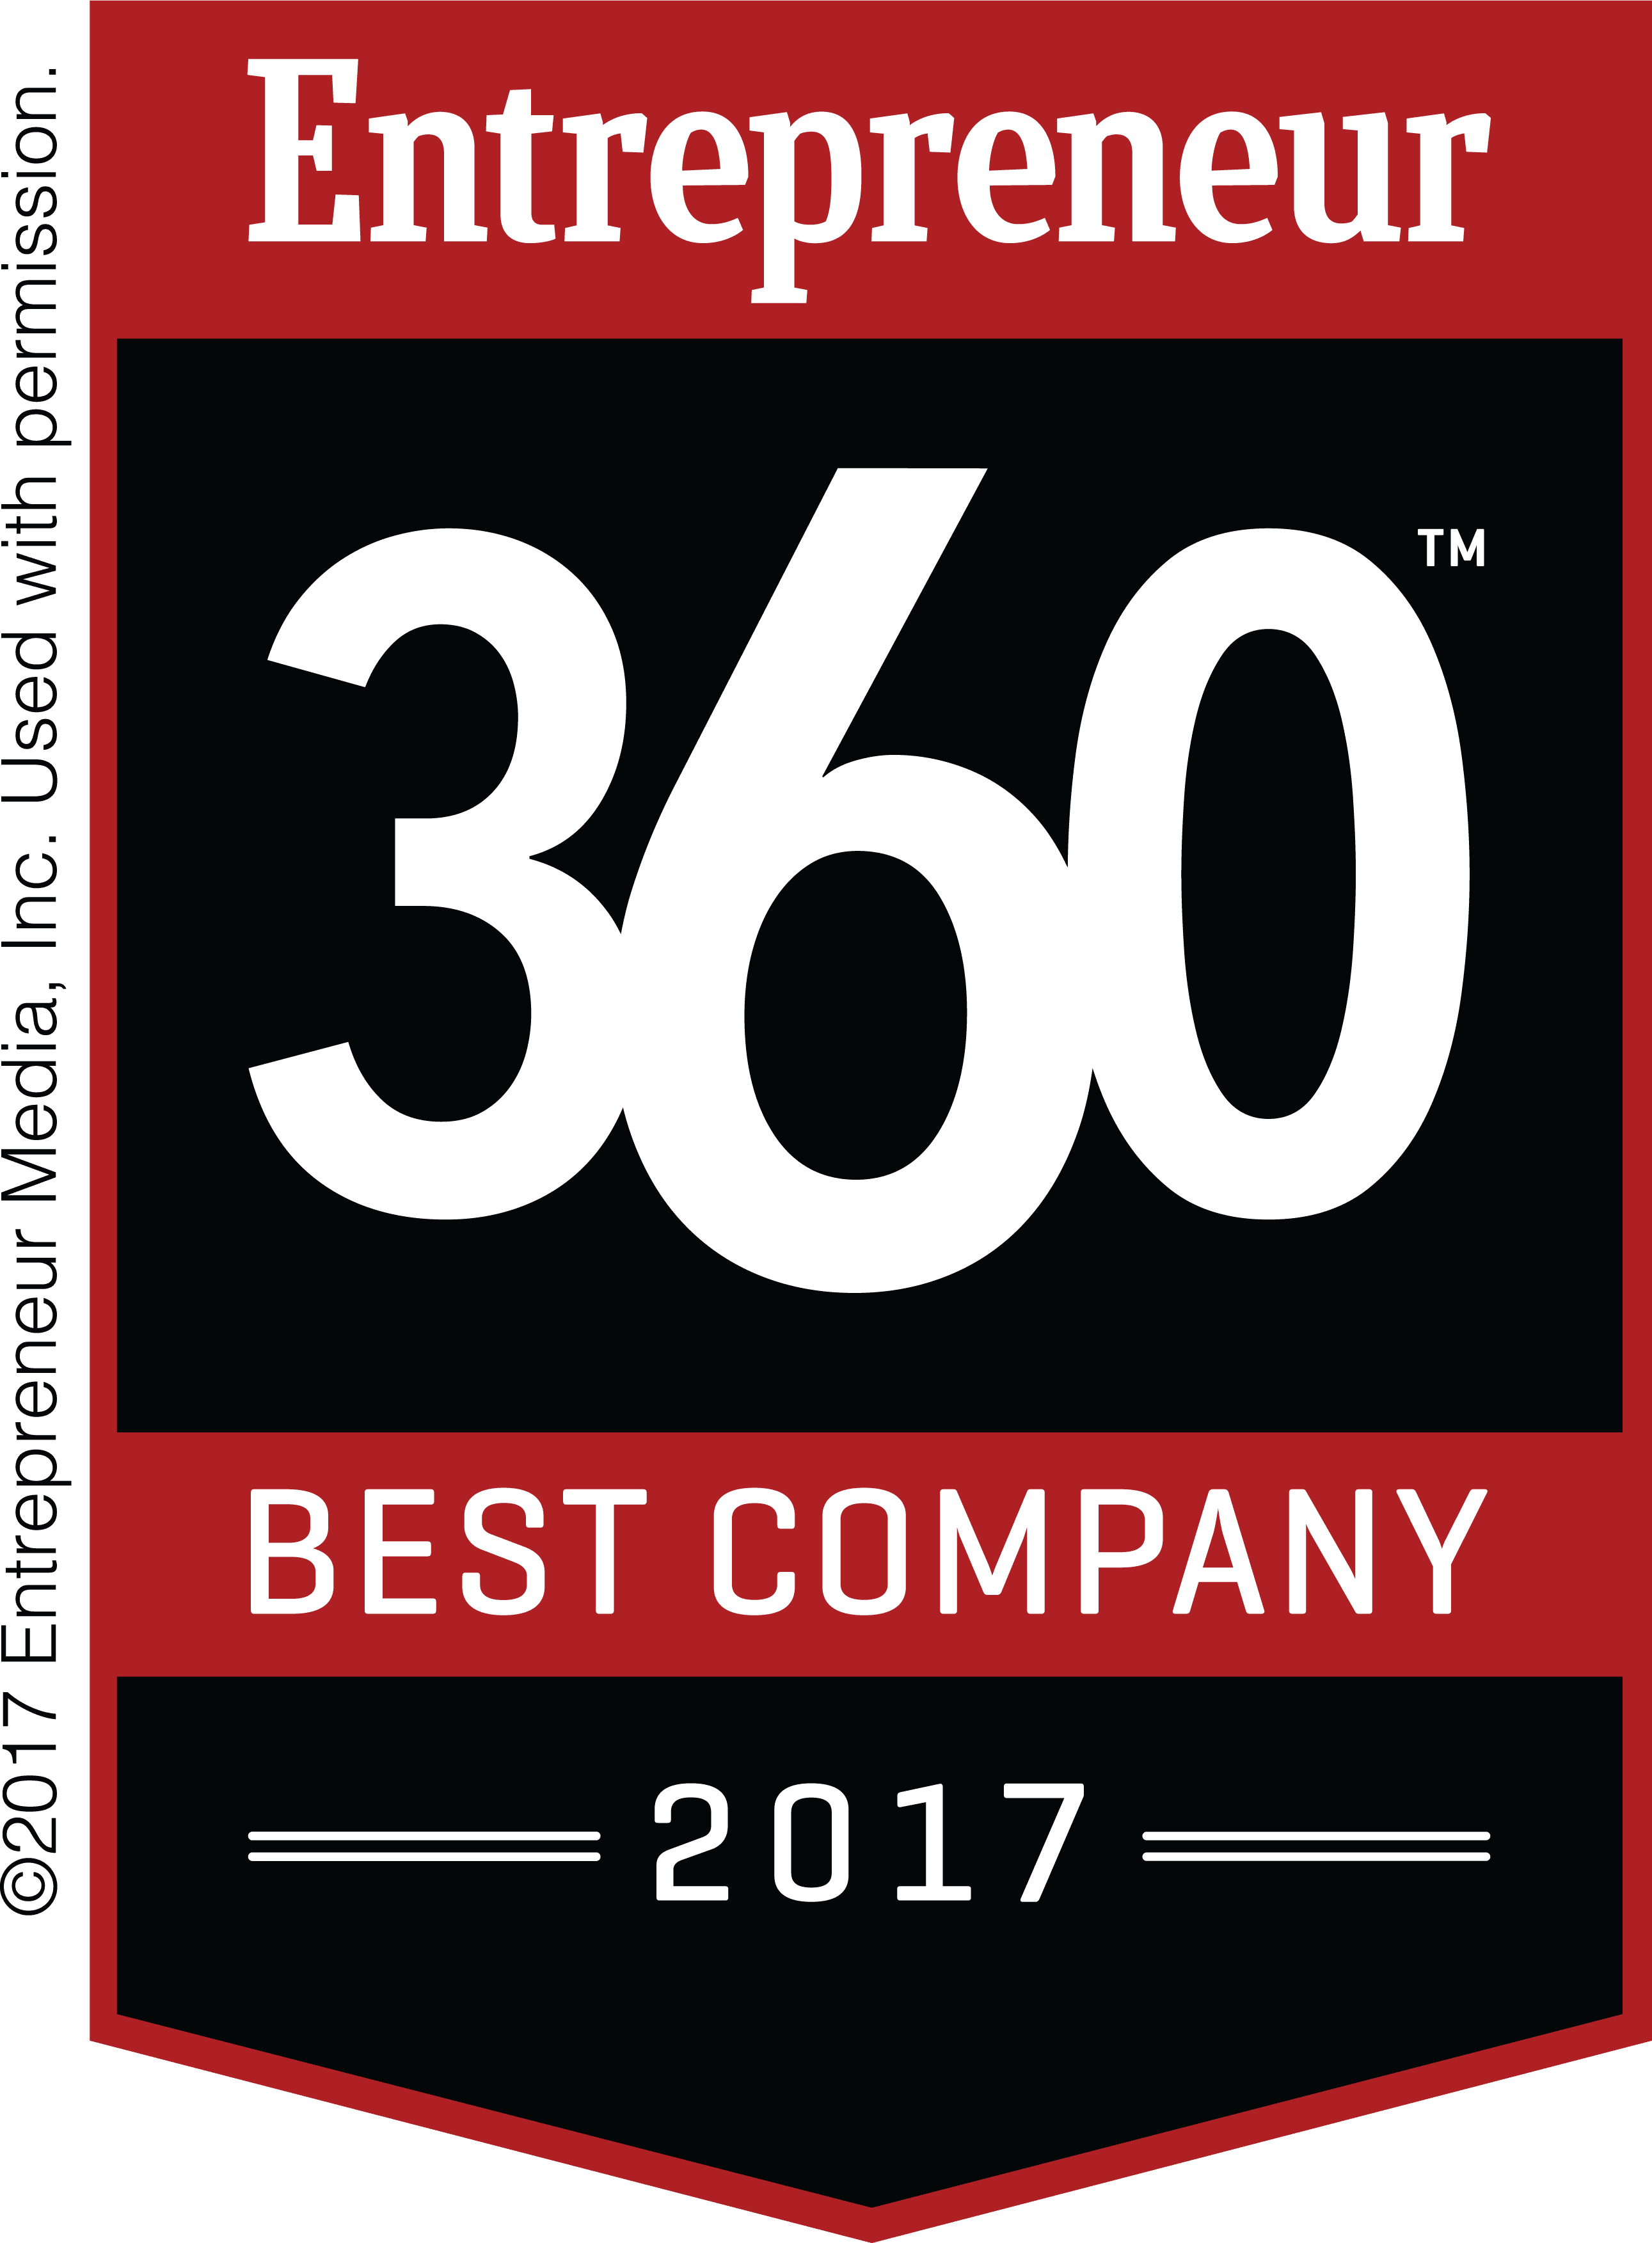 Entrepreneur 360 Award Badge